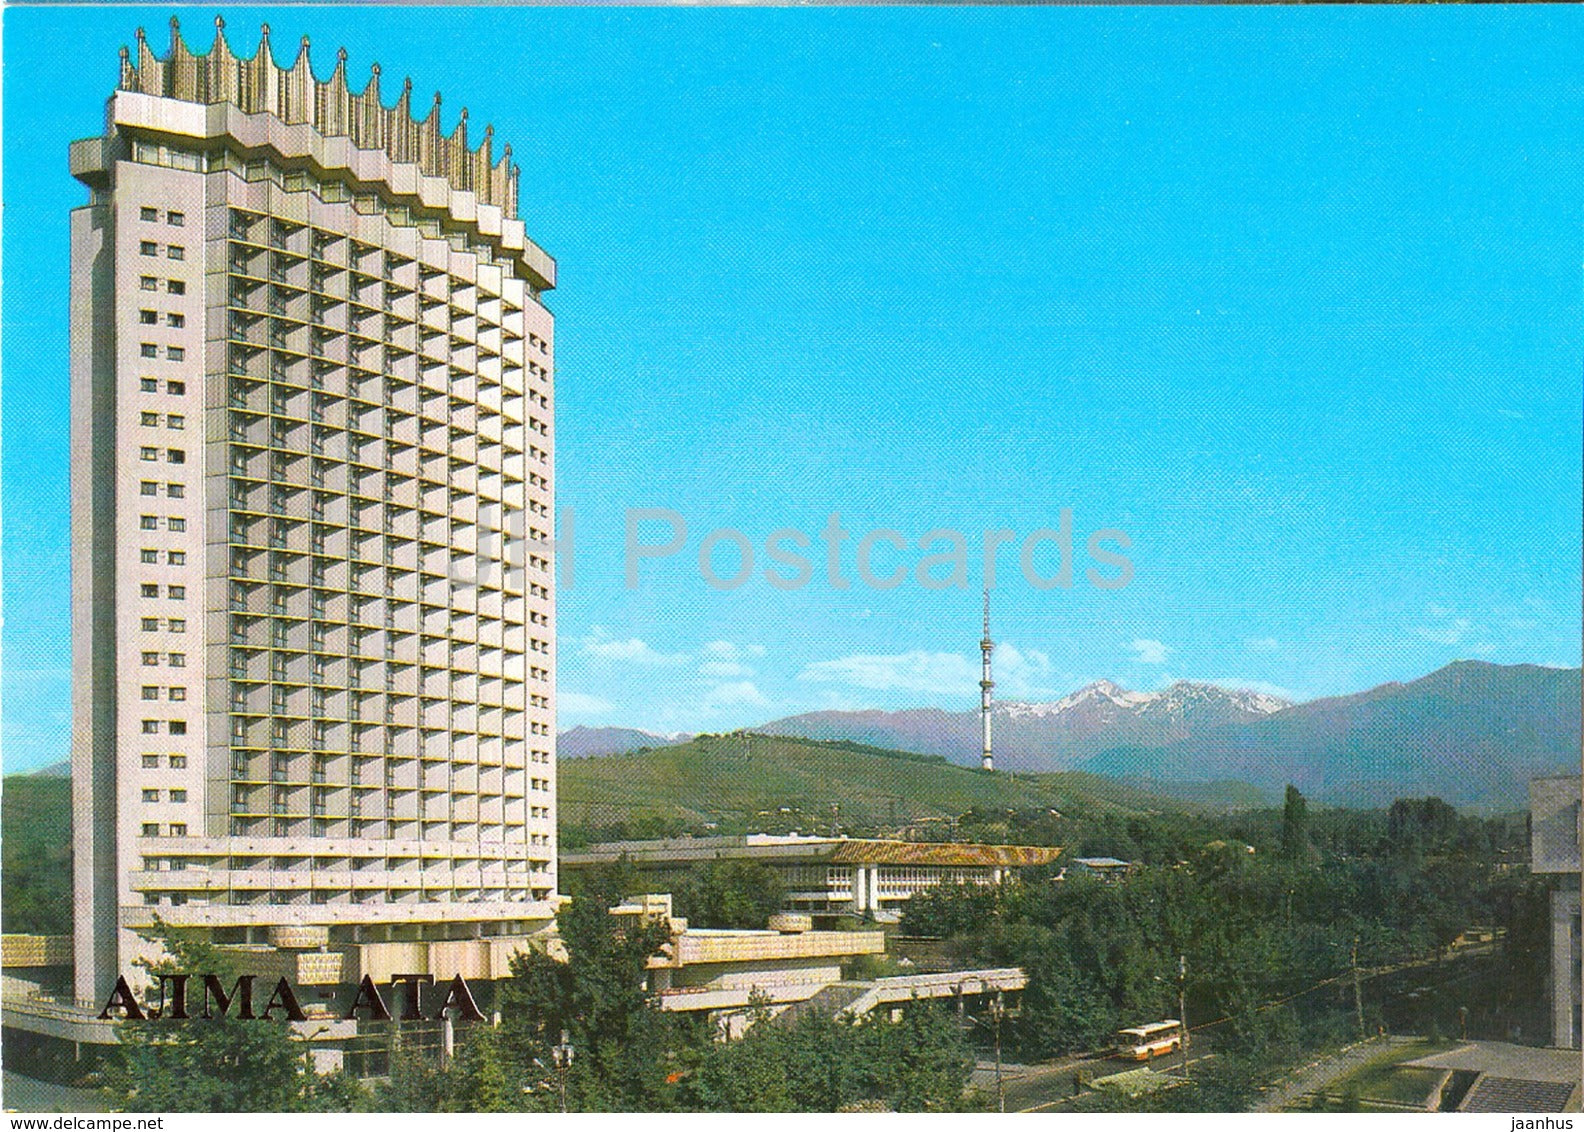 Almaty - Alma Ata - hotel Kazakhstan - 1987 - Kazakhstan USSR - unused